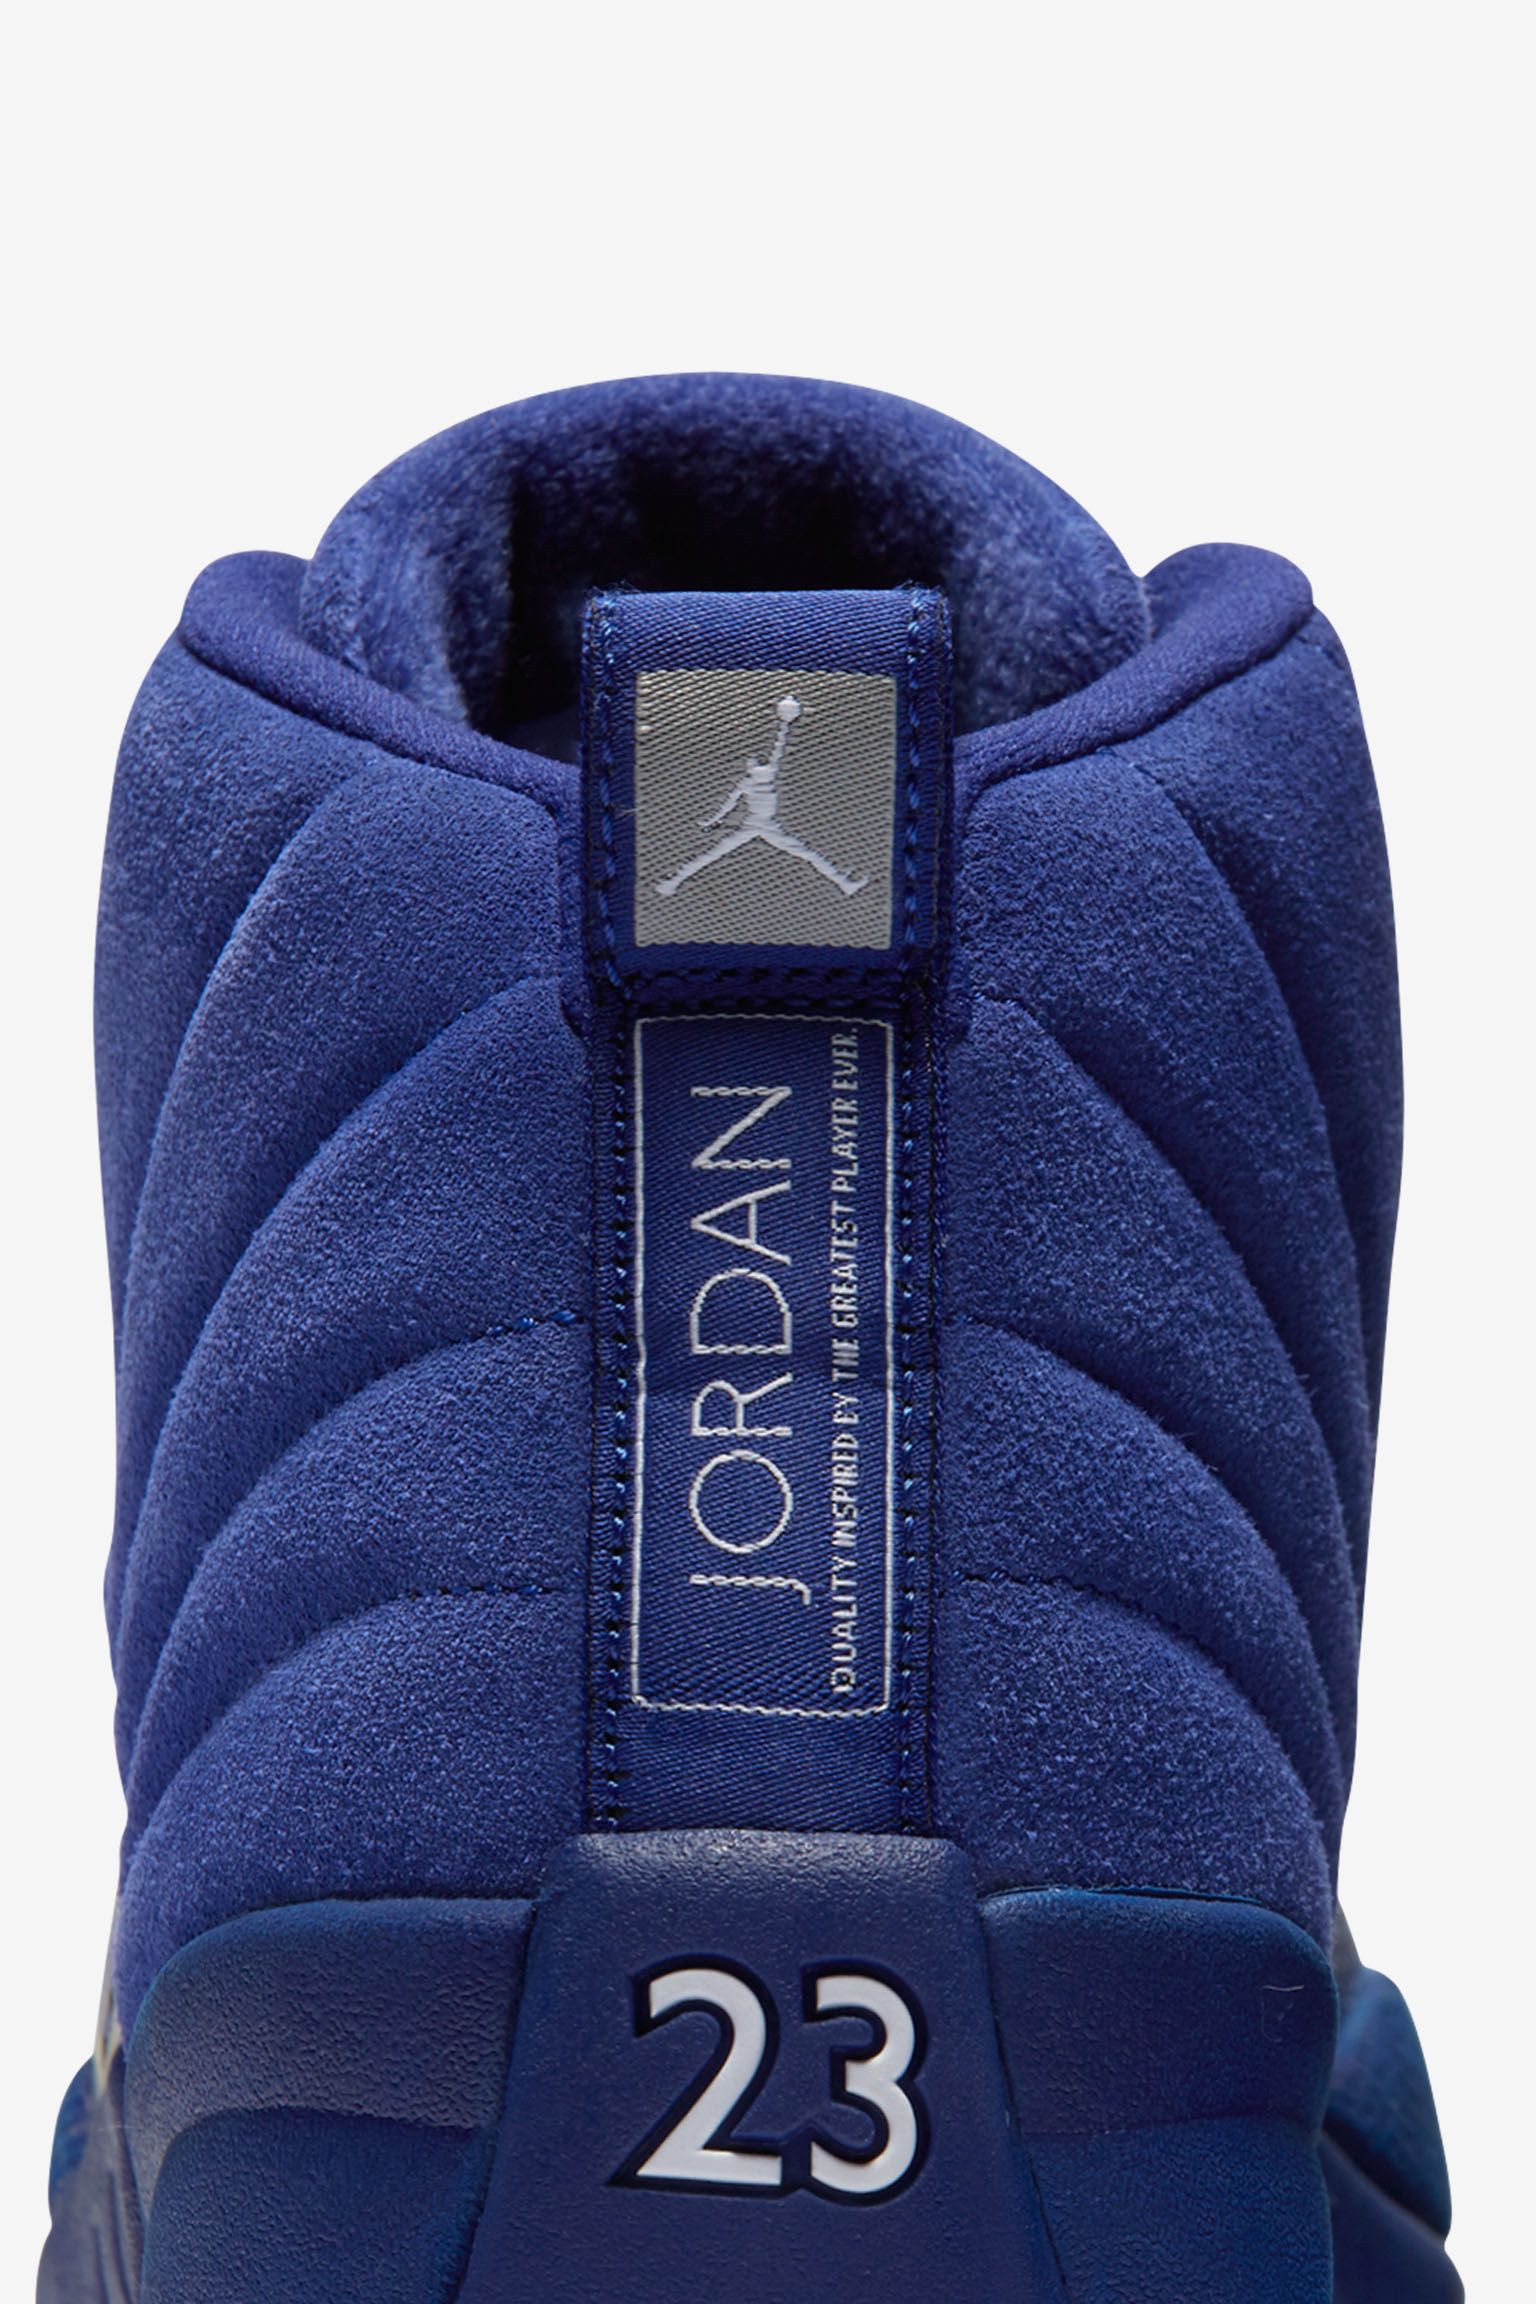 Air Jordan 12 Retro Deep Royal Blue Release Date Nike Snkrs